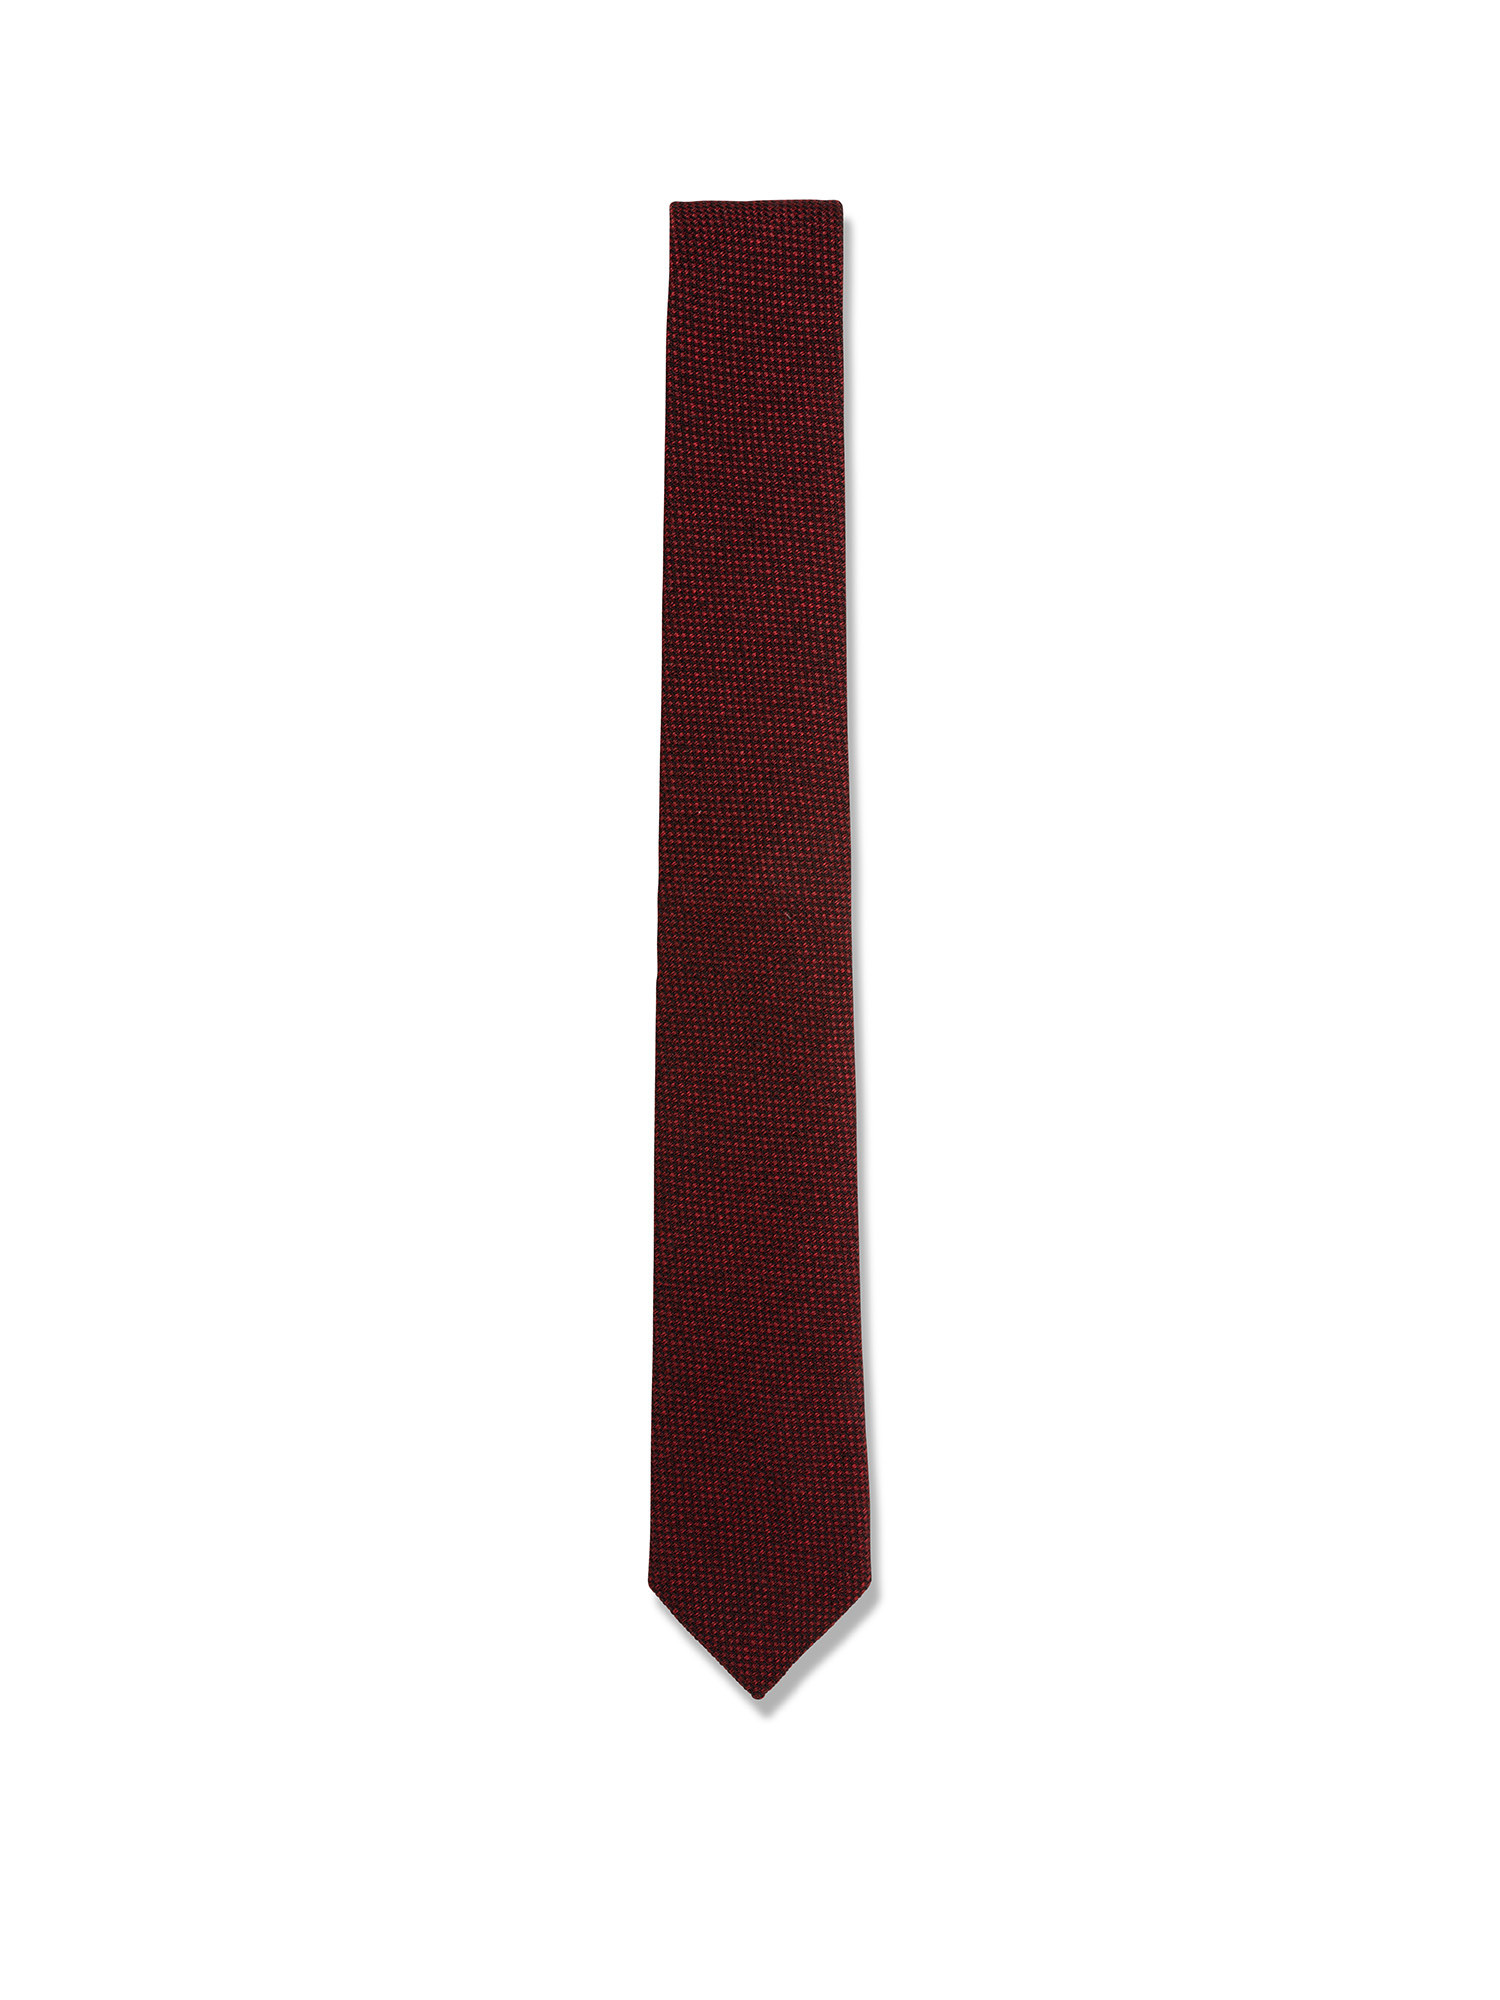 Luca D'Altieri - Classic patterned silk tie, Red Bordeaux, large image number 1